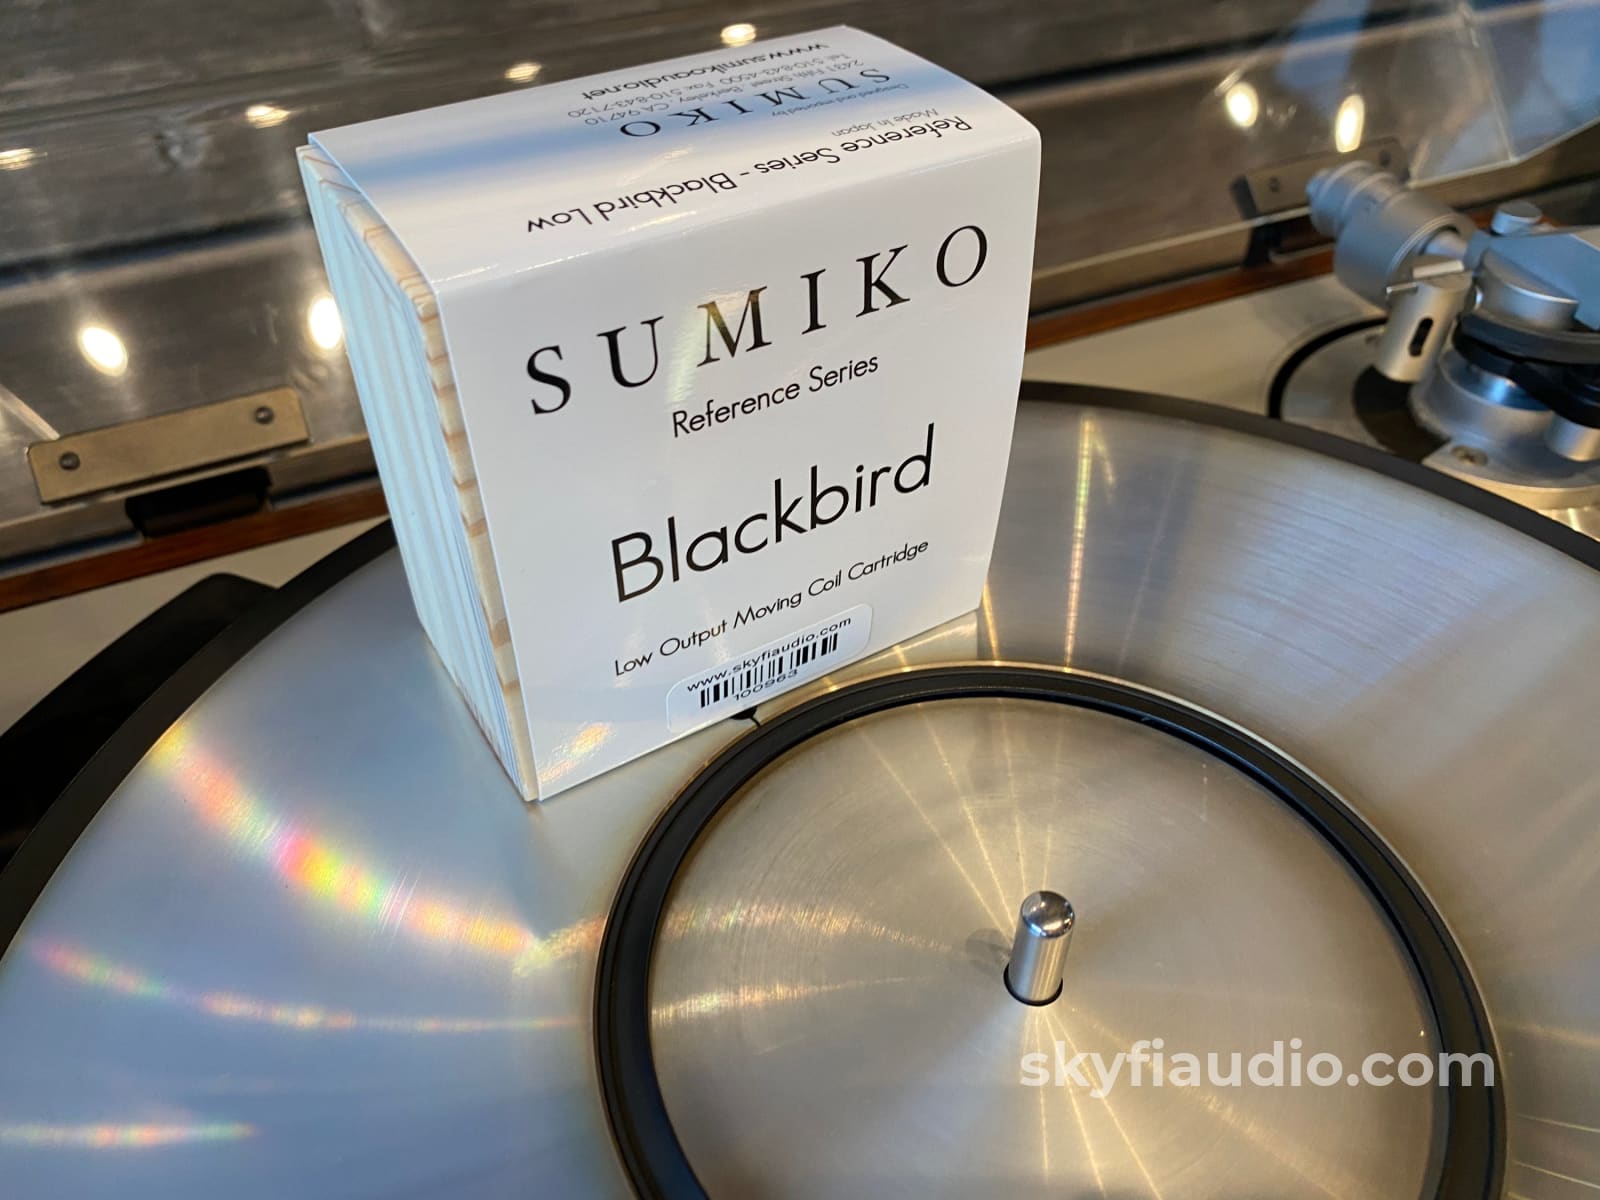 Luxman Pd-300 Vintage Turntable With New Sumiko Blackbird Mc Cartridge